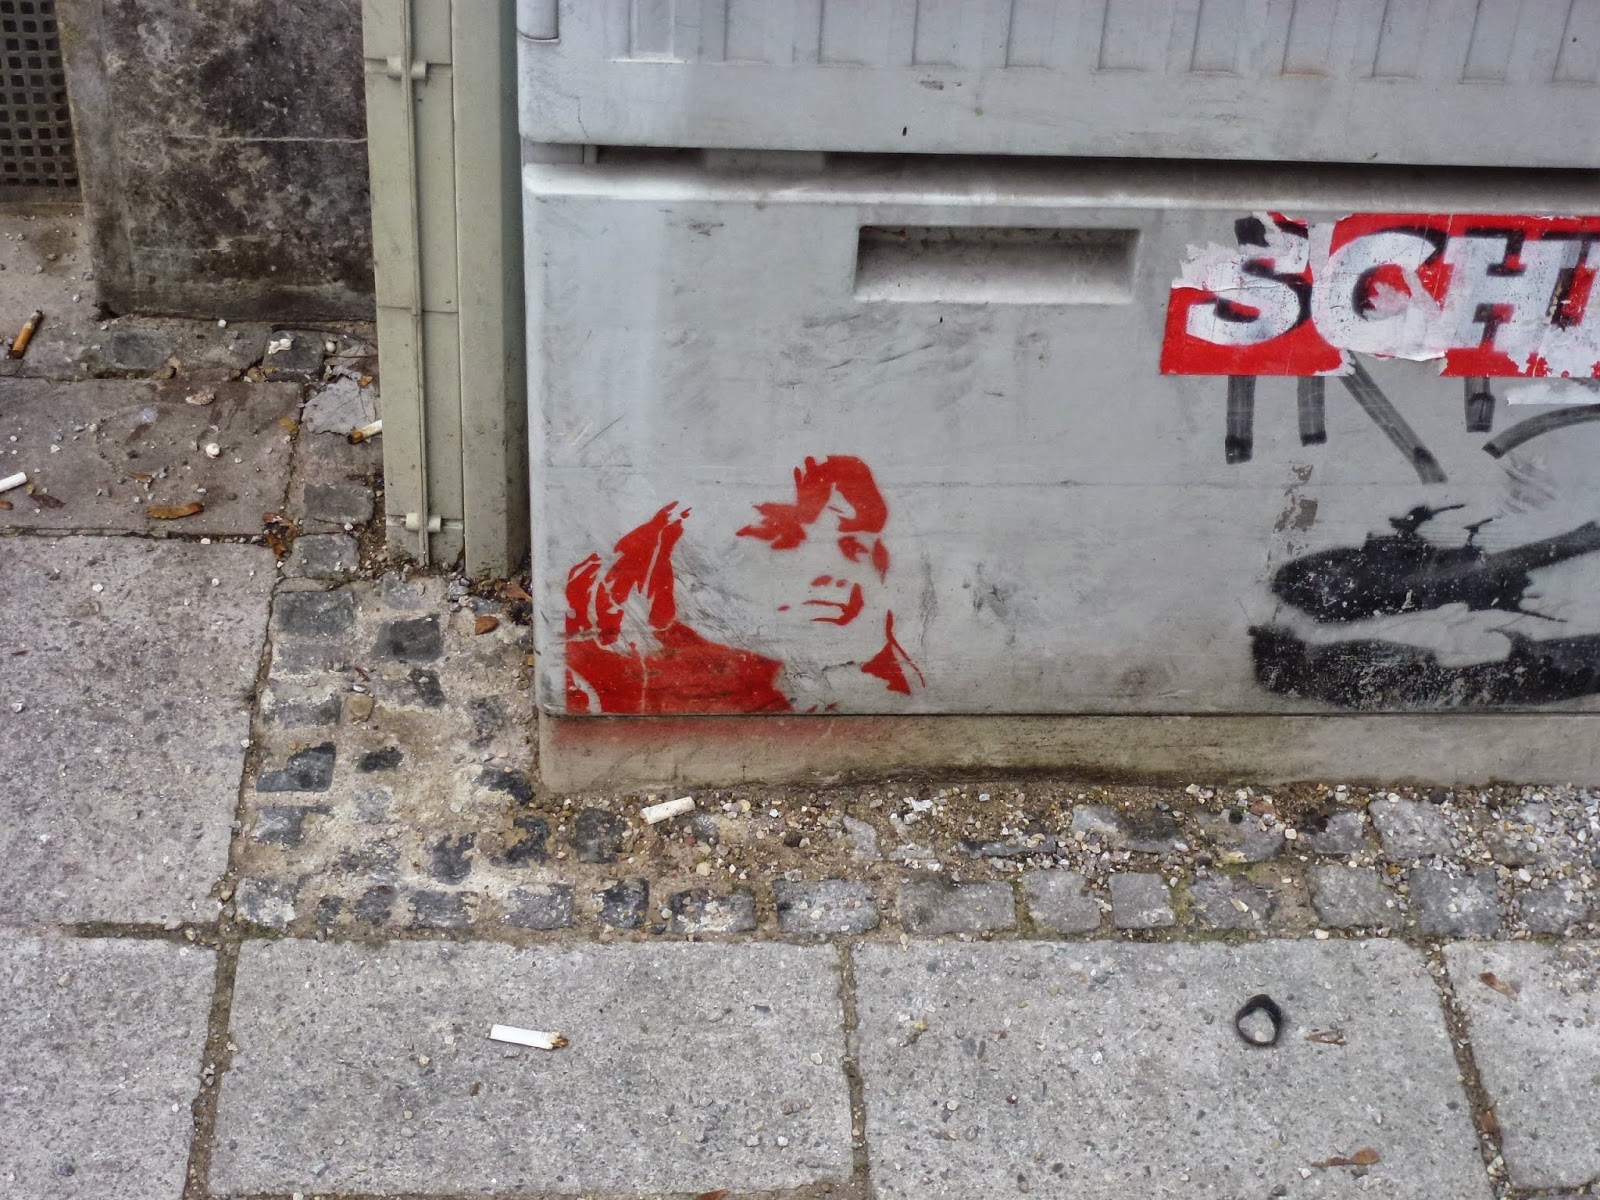 Stencil, Streetart, Urbanart